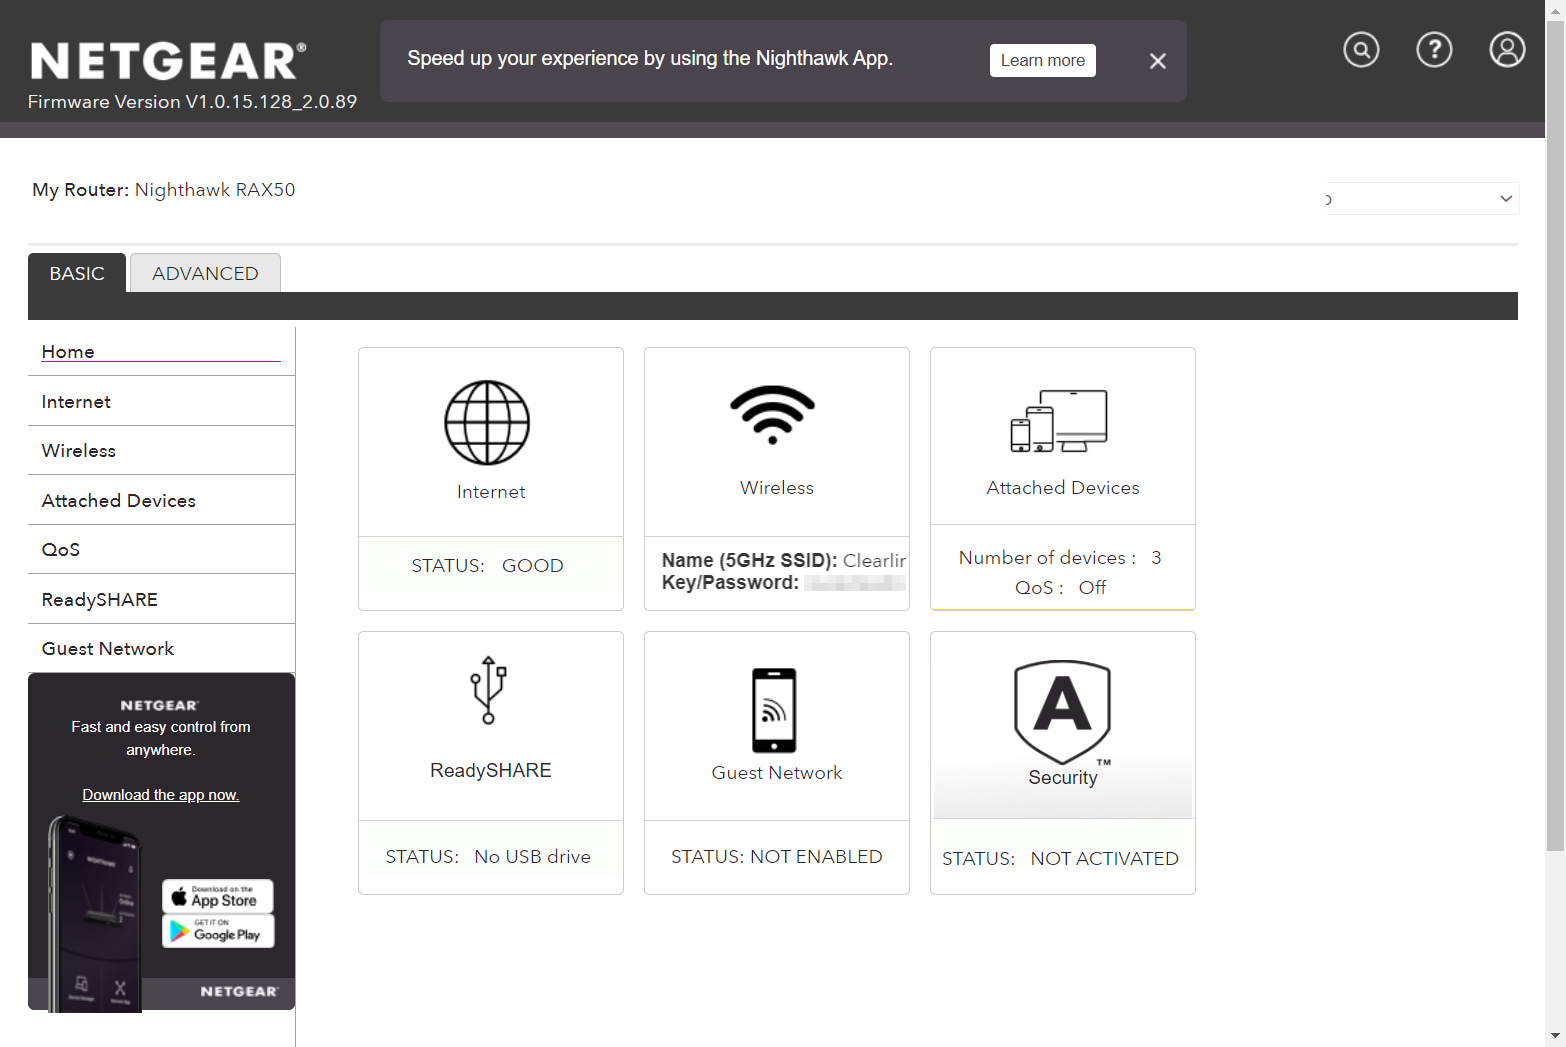 Web interface of Nighthawk RAX50 router